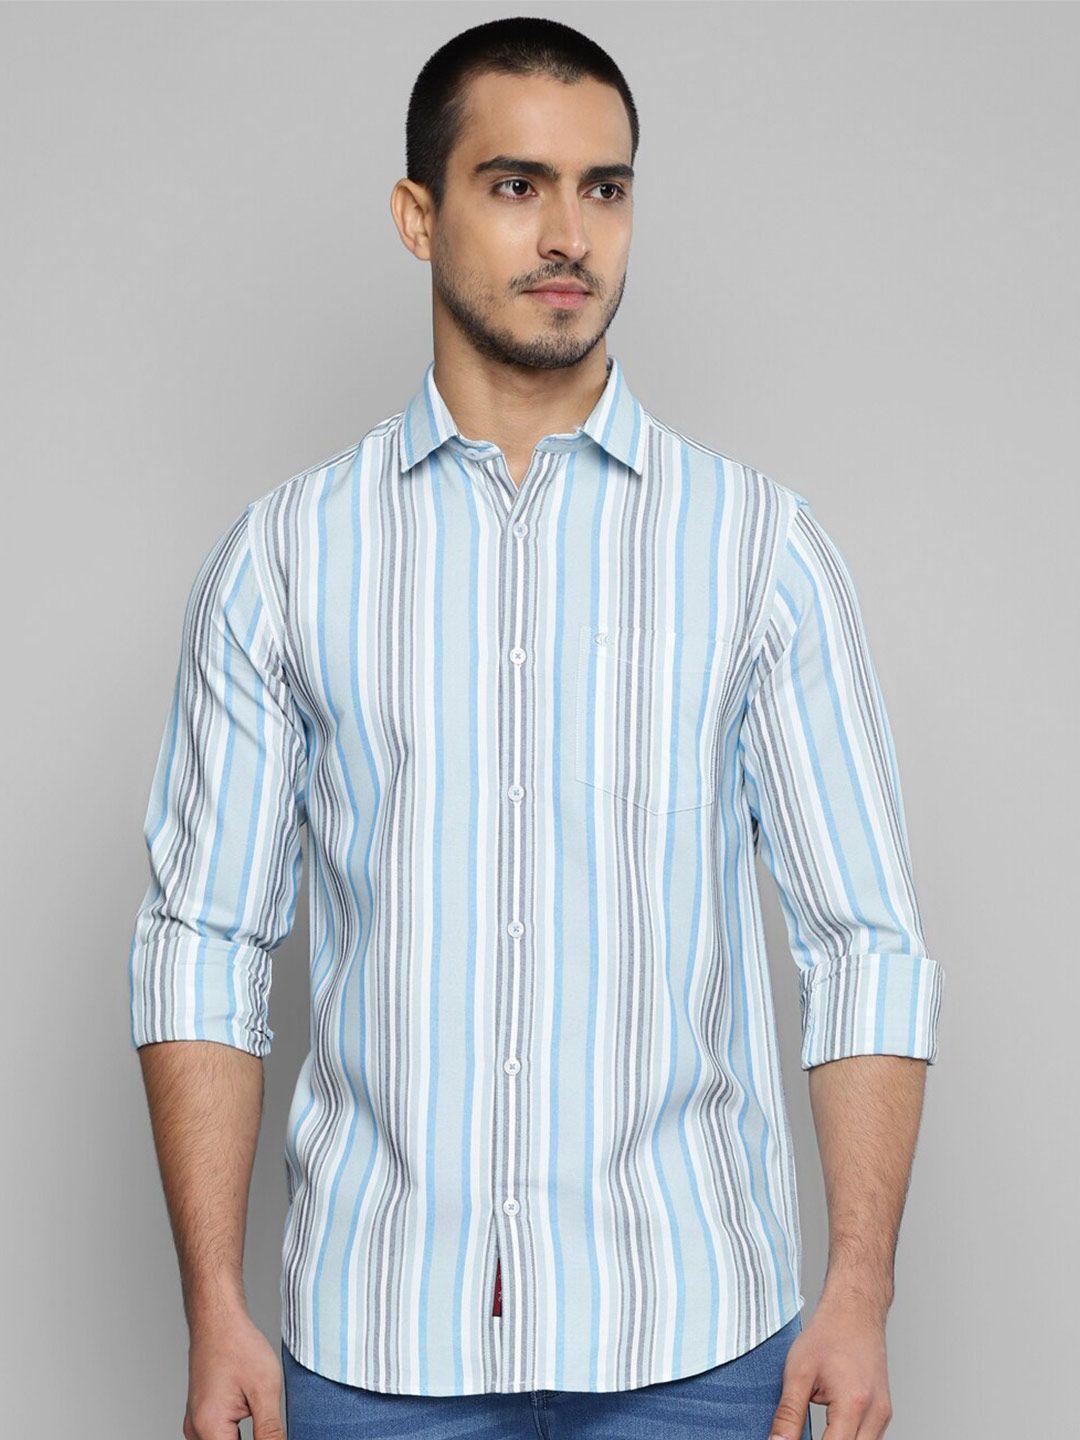 allen cooper india slim slim fit opaque striped cotton casual shirt